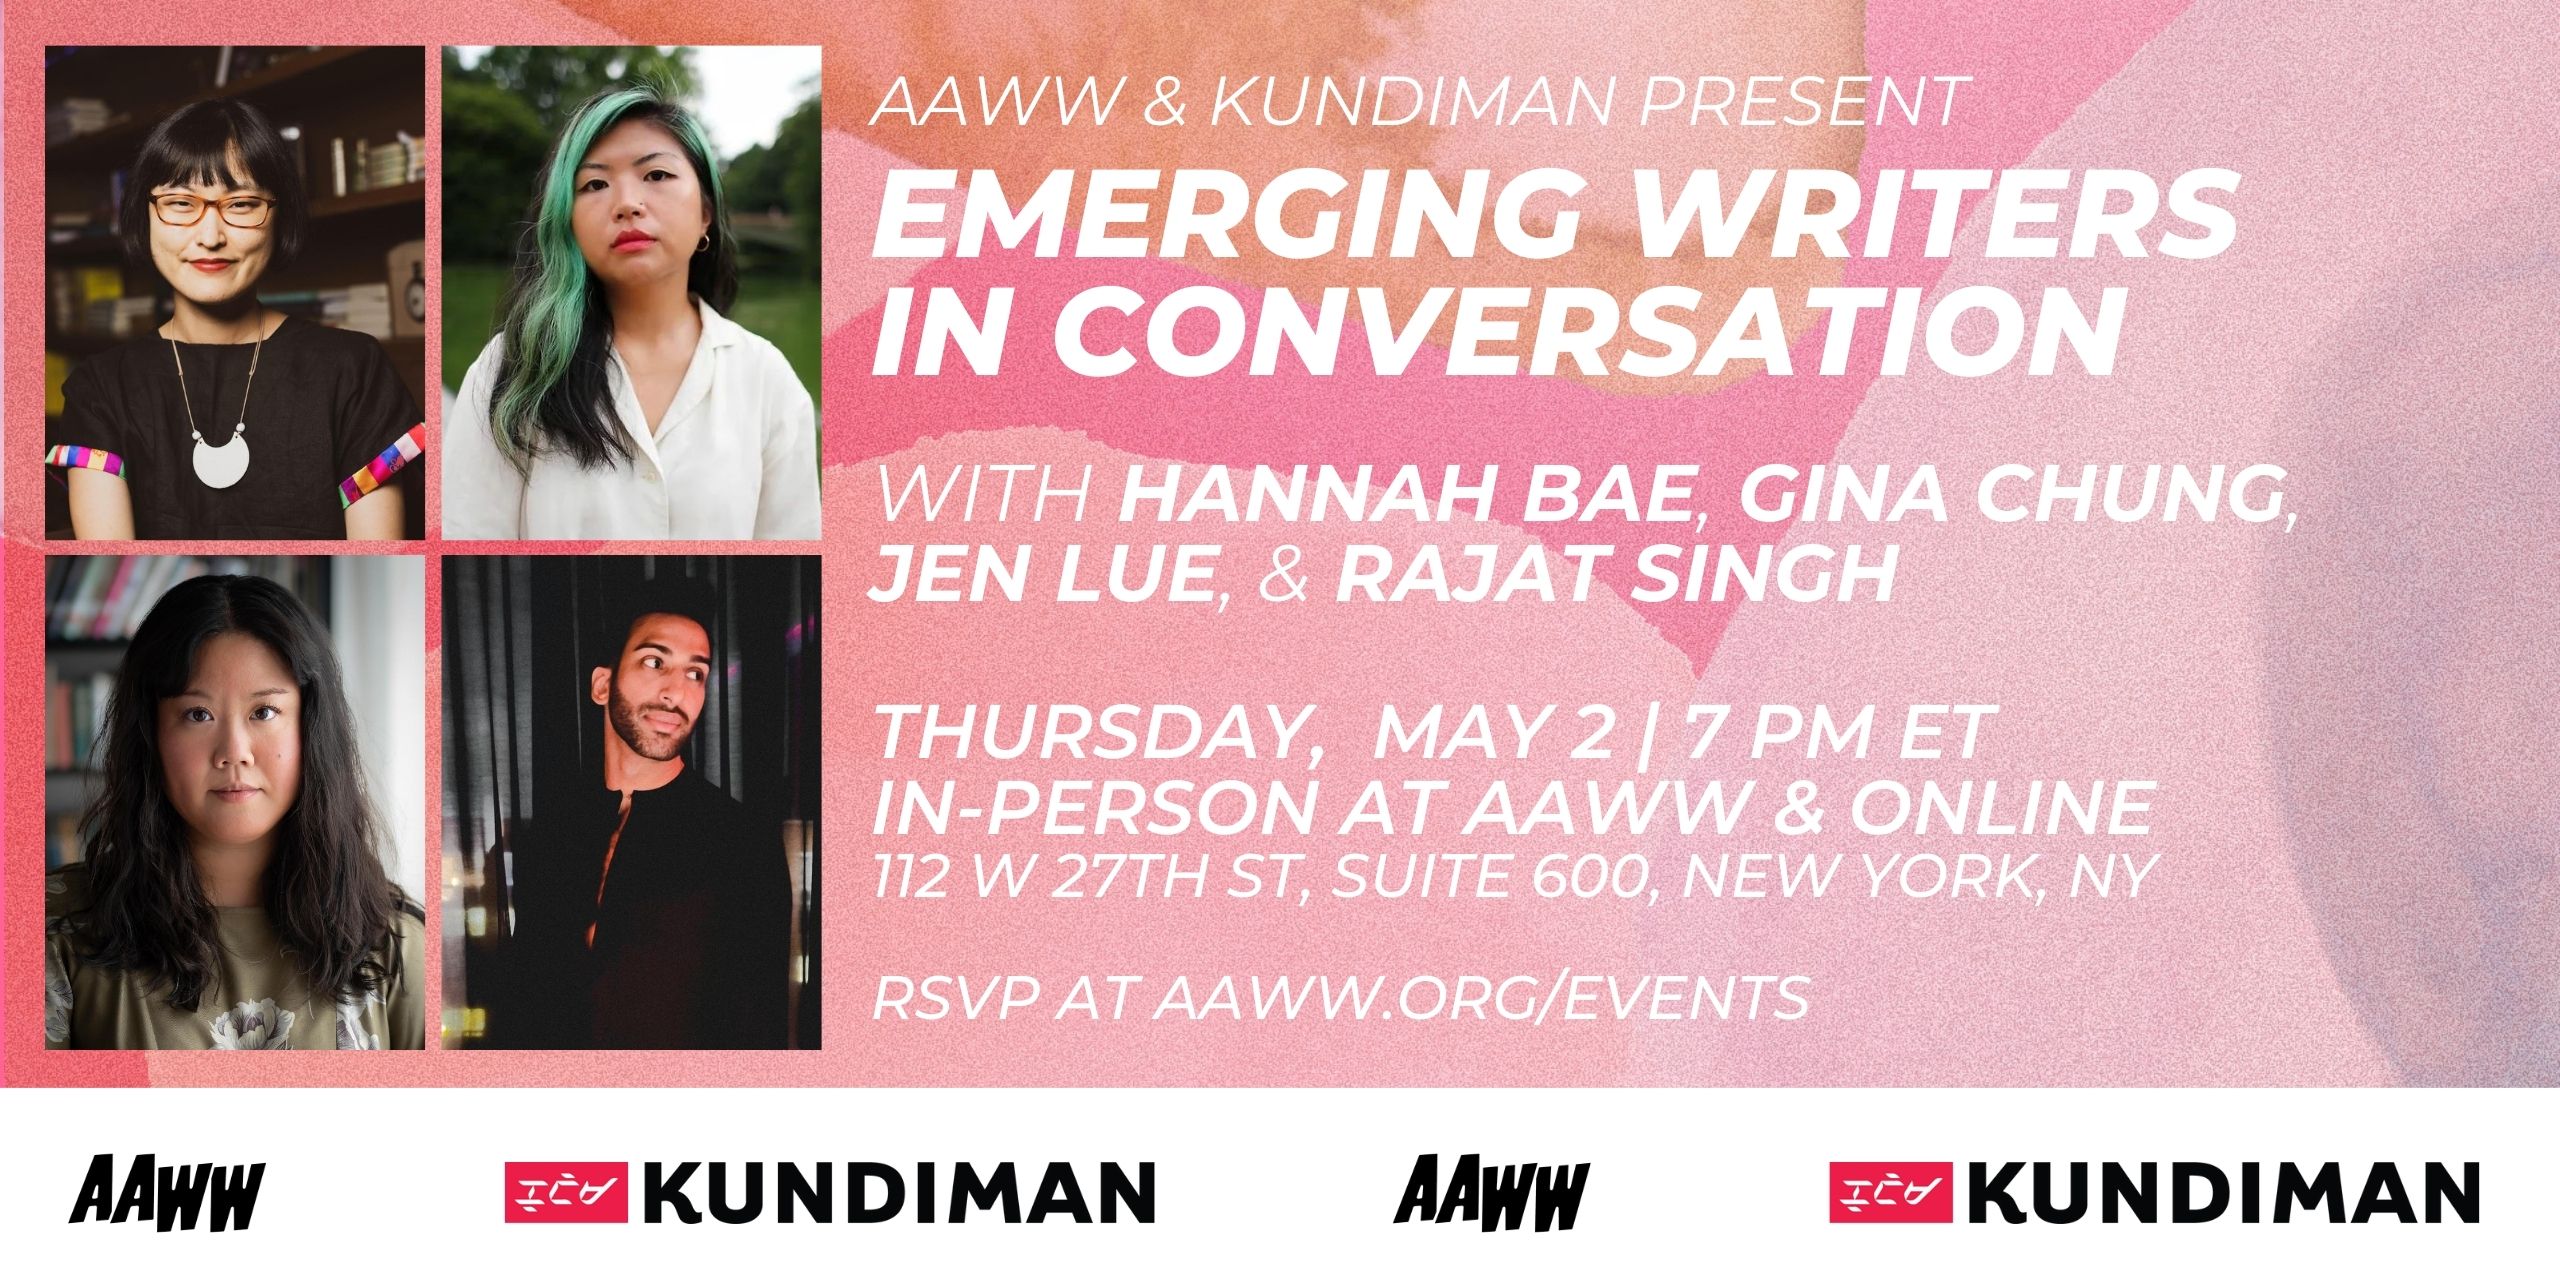 AAWW & Kundiman Present: Emerging Writers in Conversation